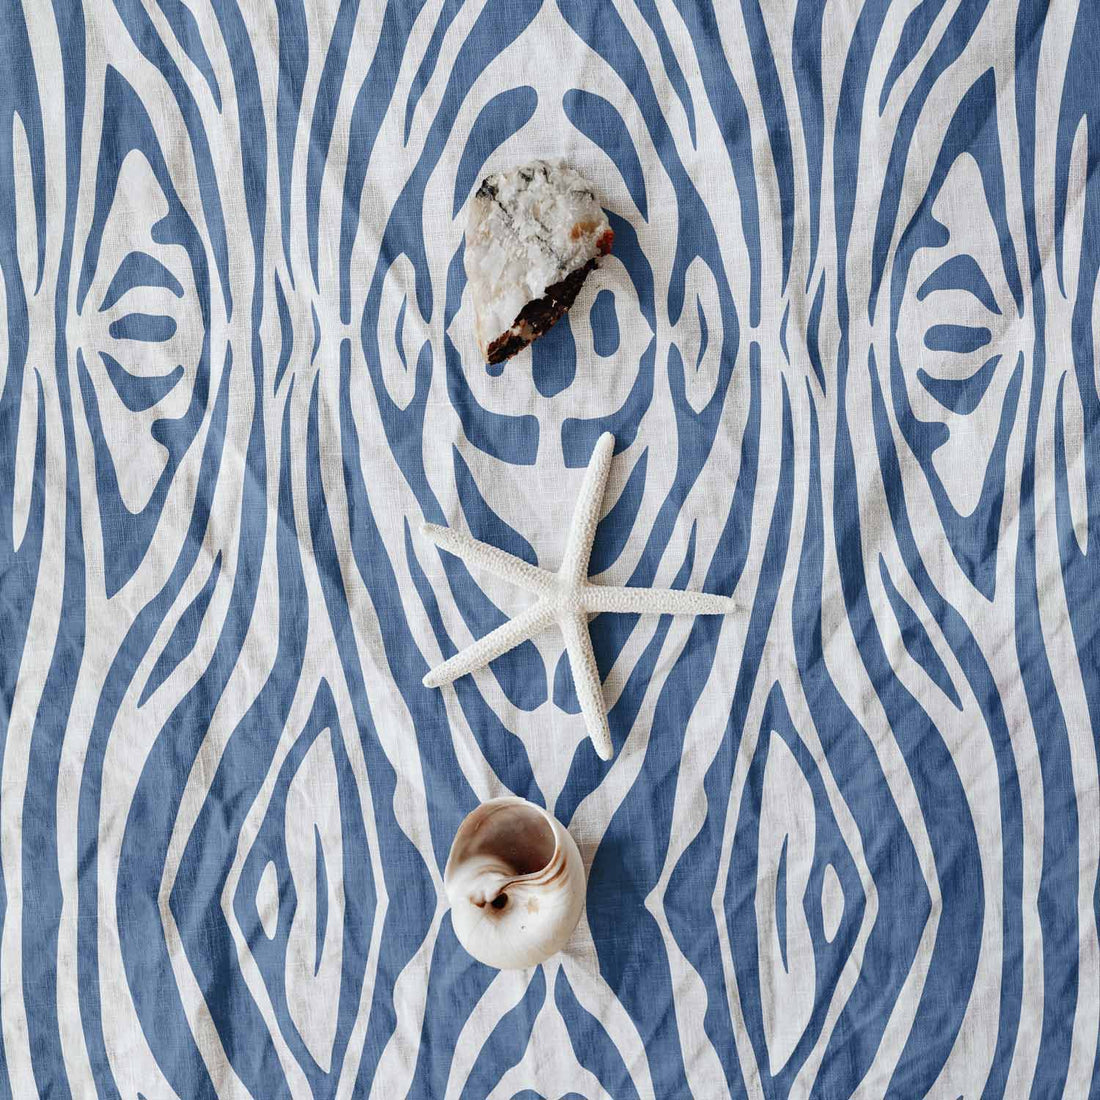 coastal fabric motif with zebra print